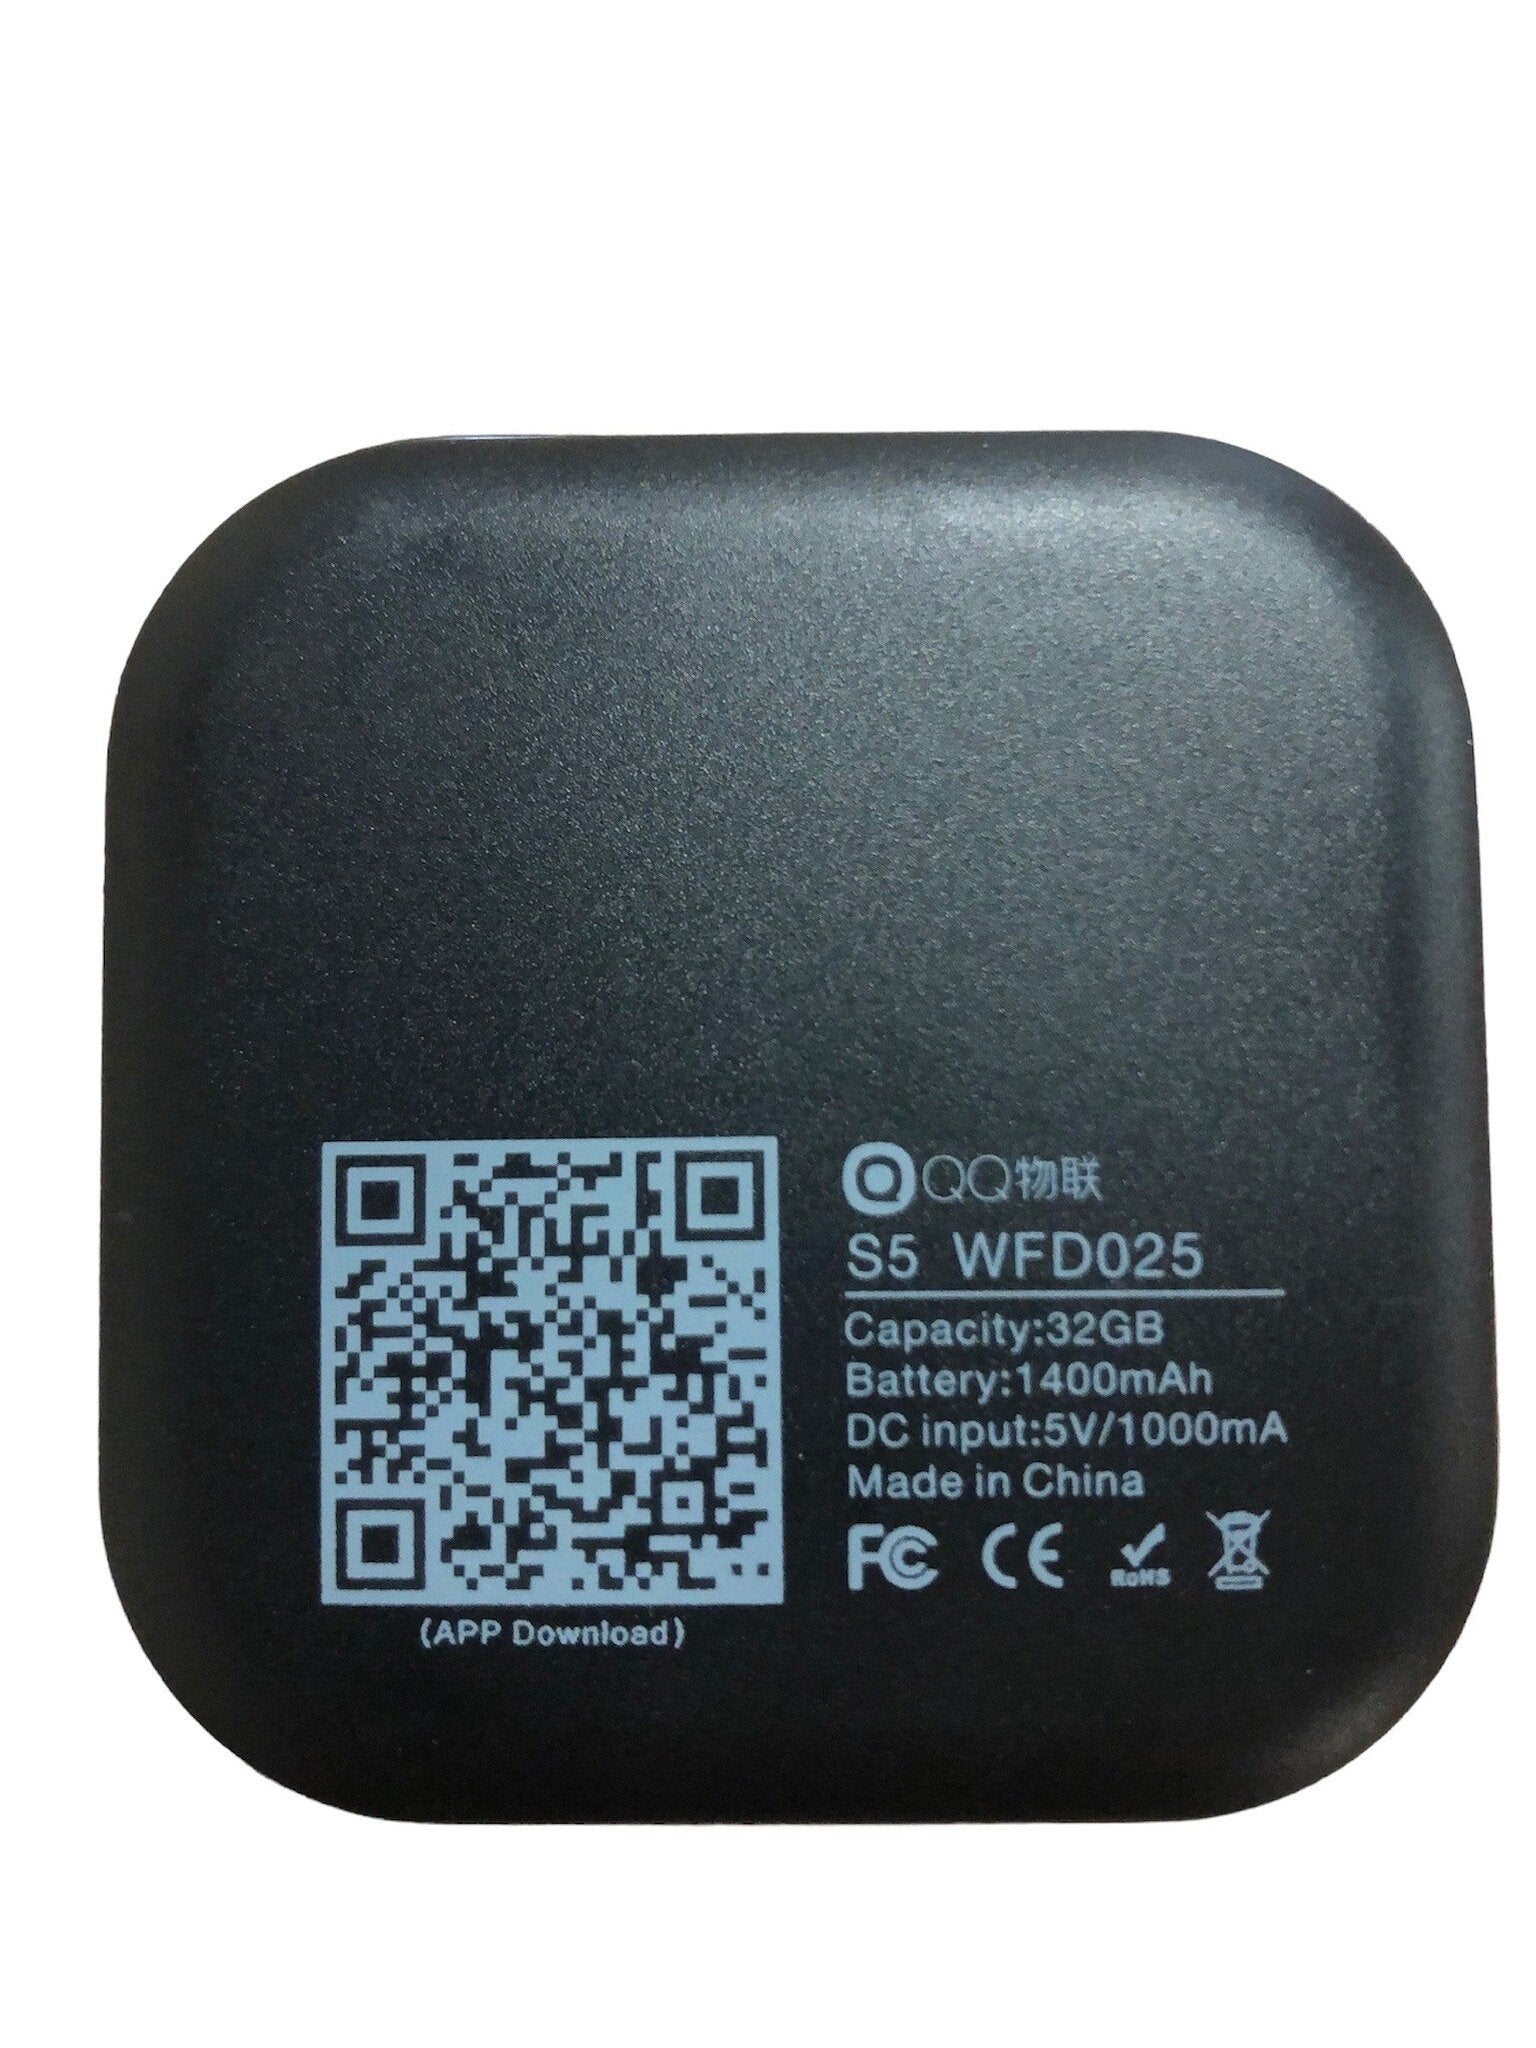 DM Wireless USB Flash Drive 32GB zwart - zilver